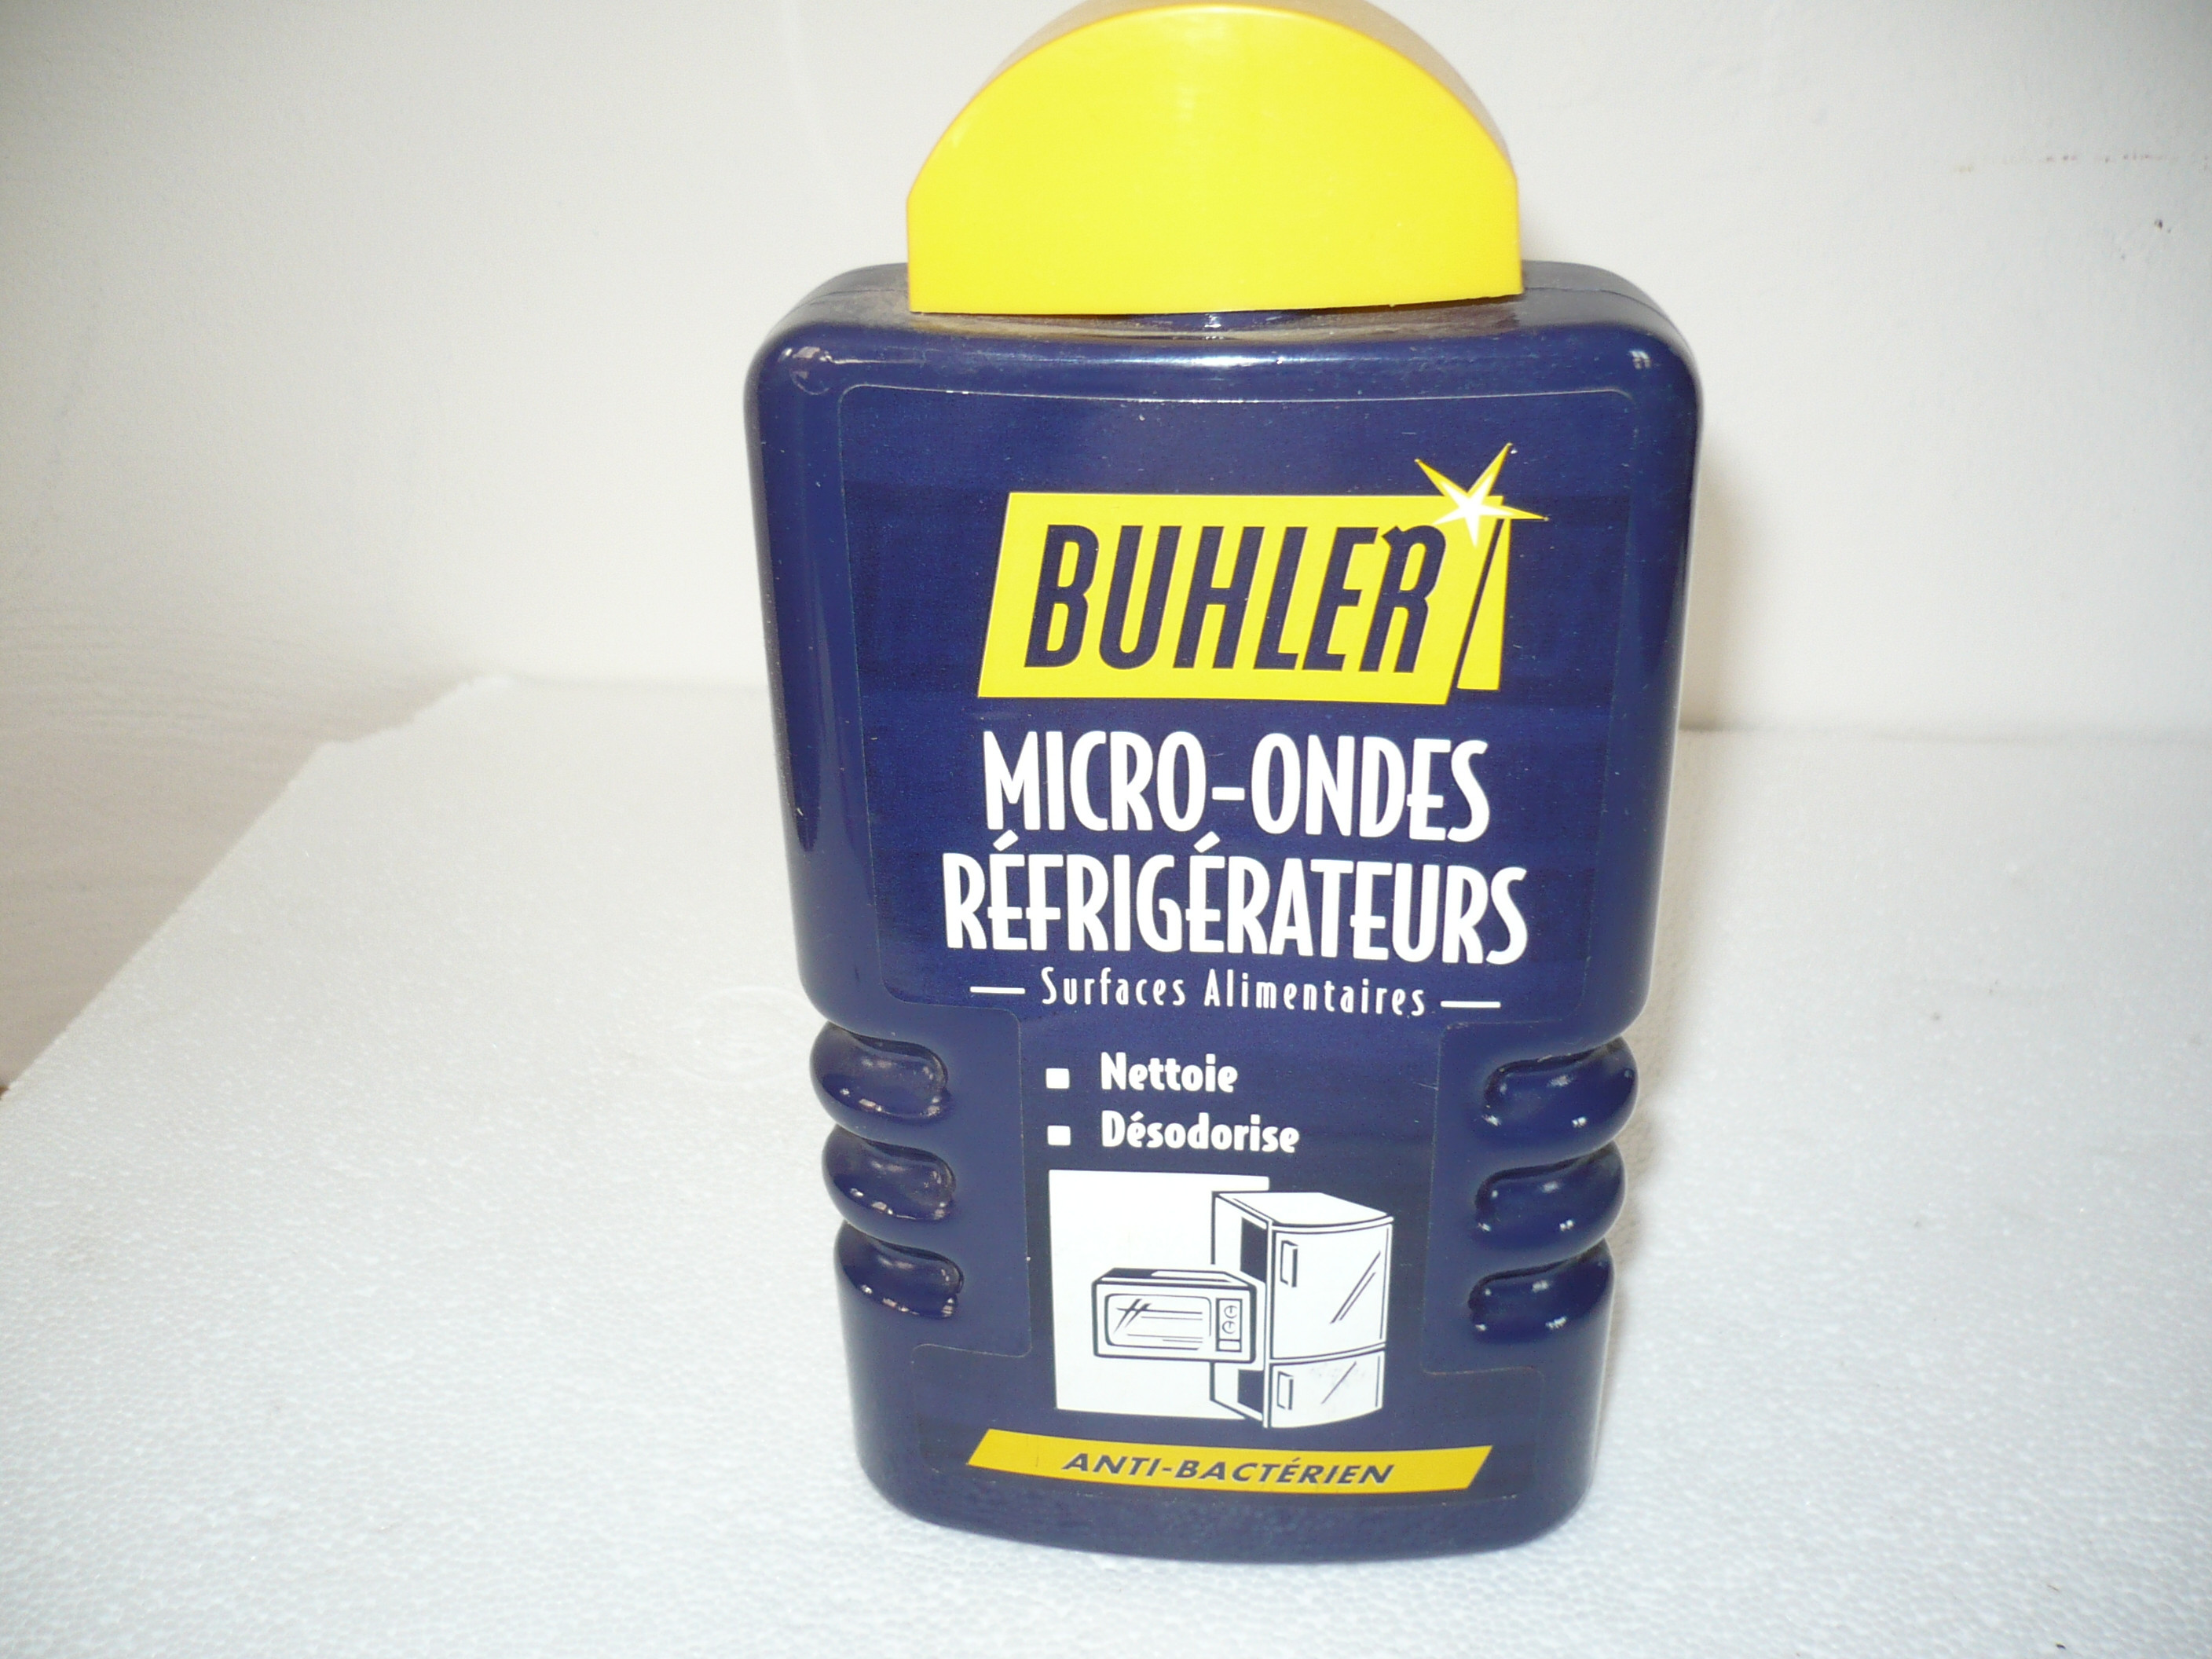 https://www.moderndroguerie.fr/10110/nettoyant-desodorisant-micro-ondes-refrigerateur-frigo-four-et-surfaces-buhler-375-ml-613-buhler.jpg